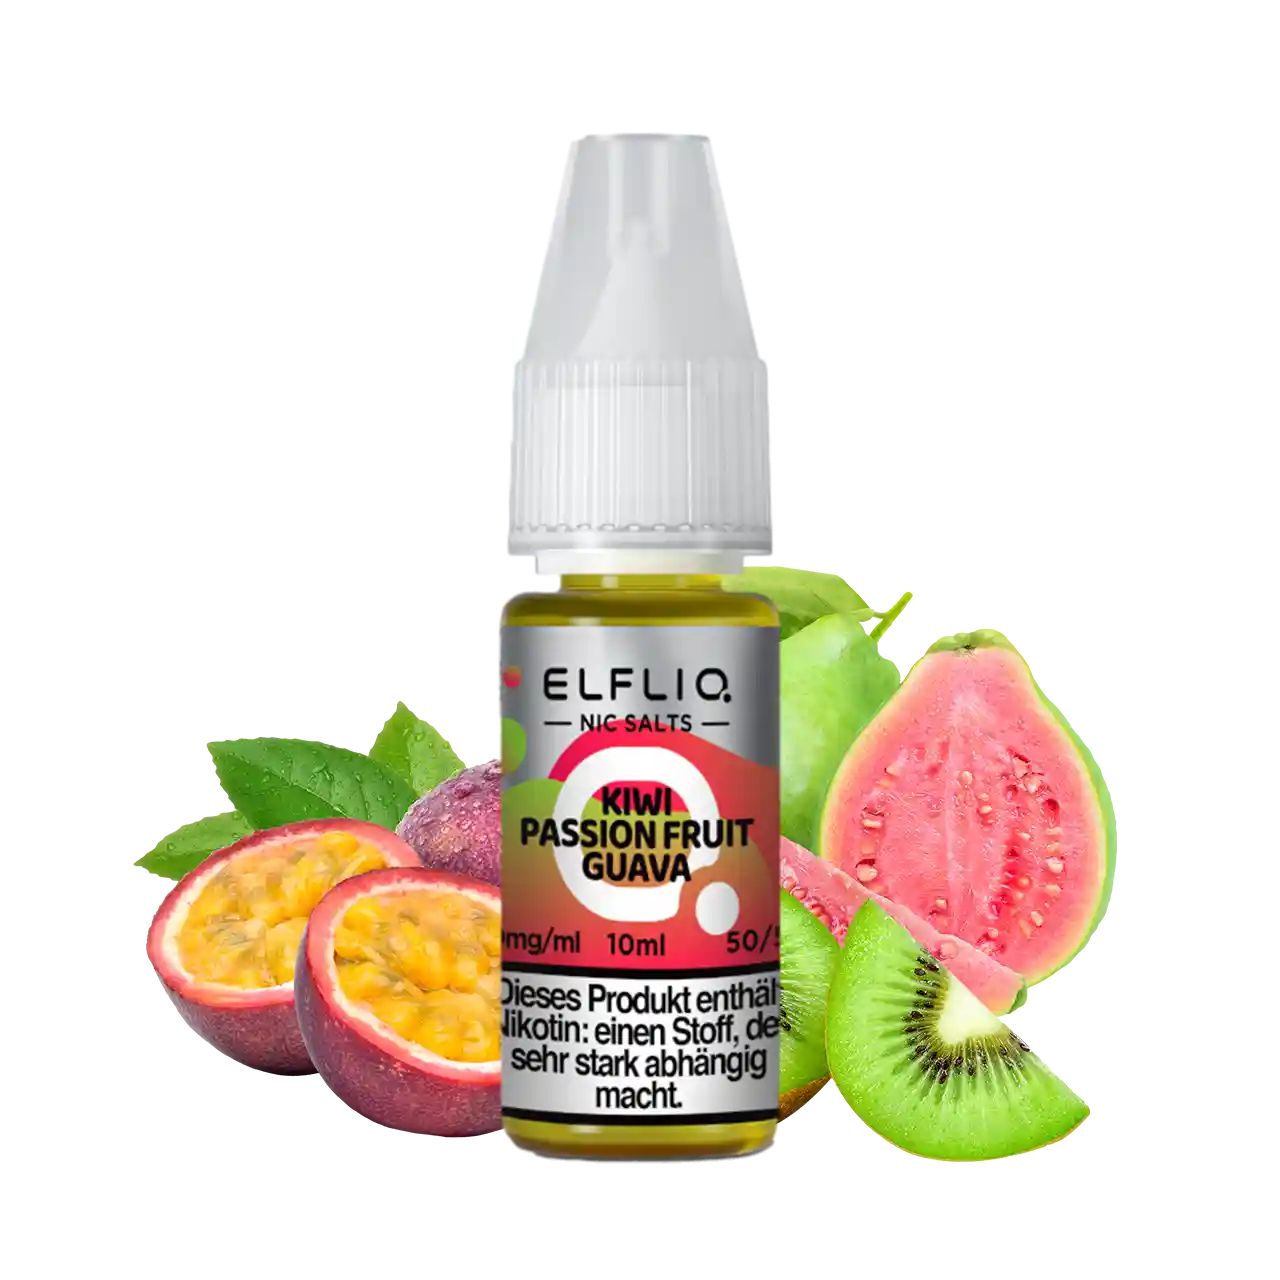 Elfliq Kiwi Passion Fruit Guava Nic Salt Liquid